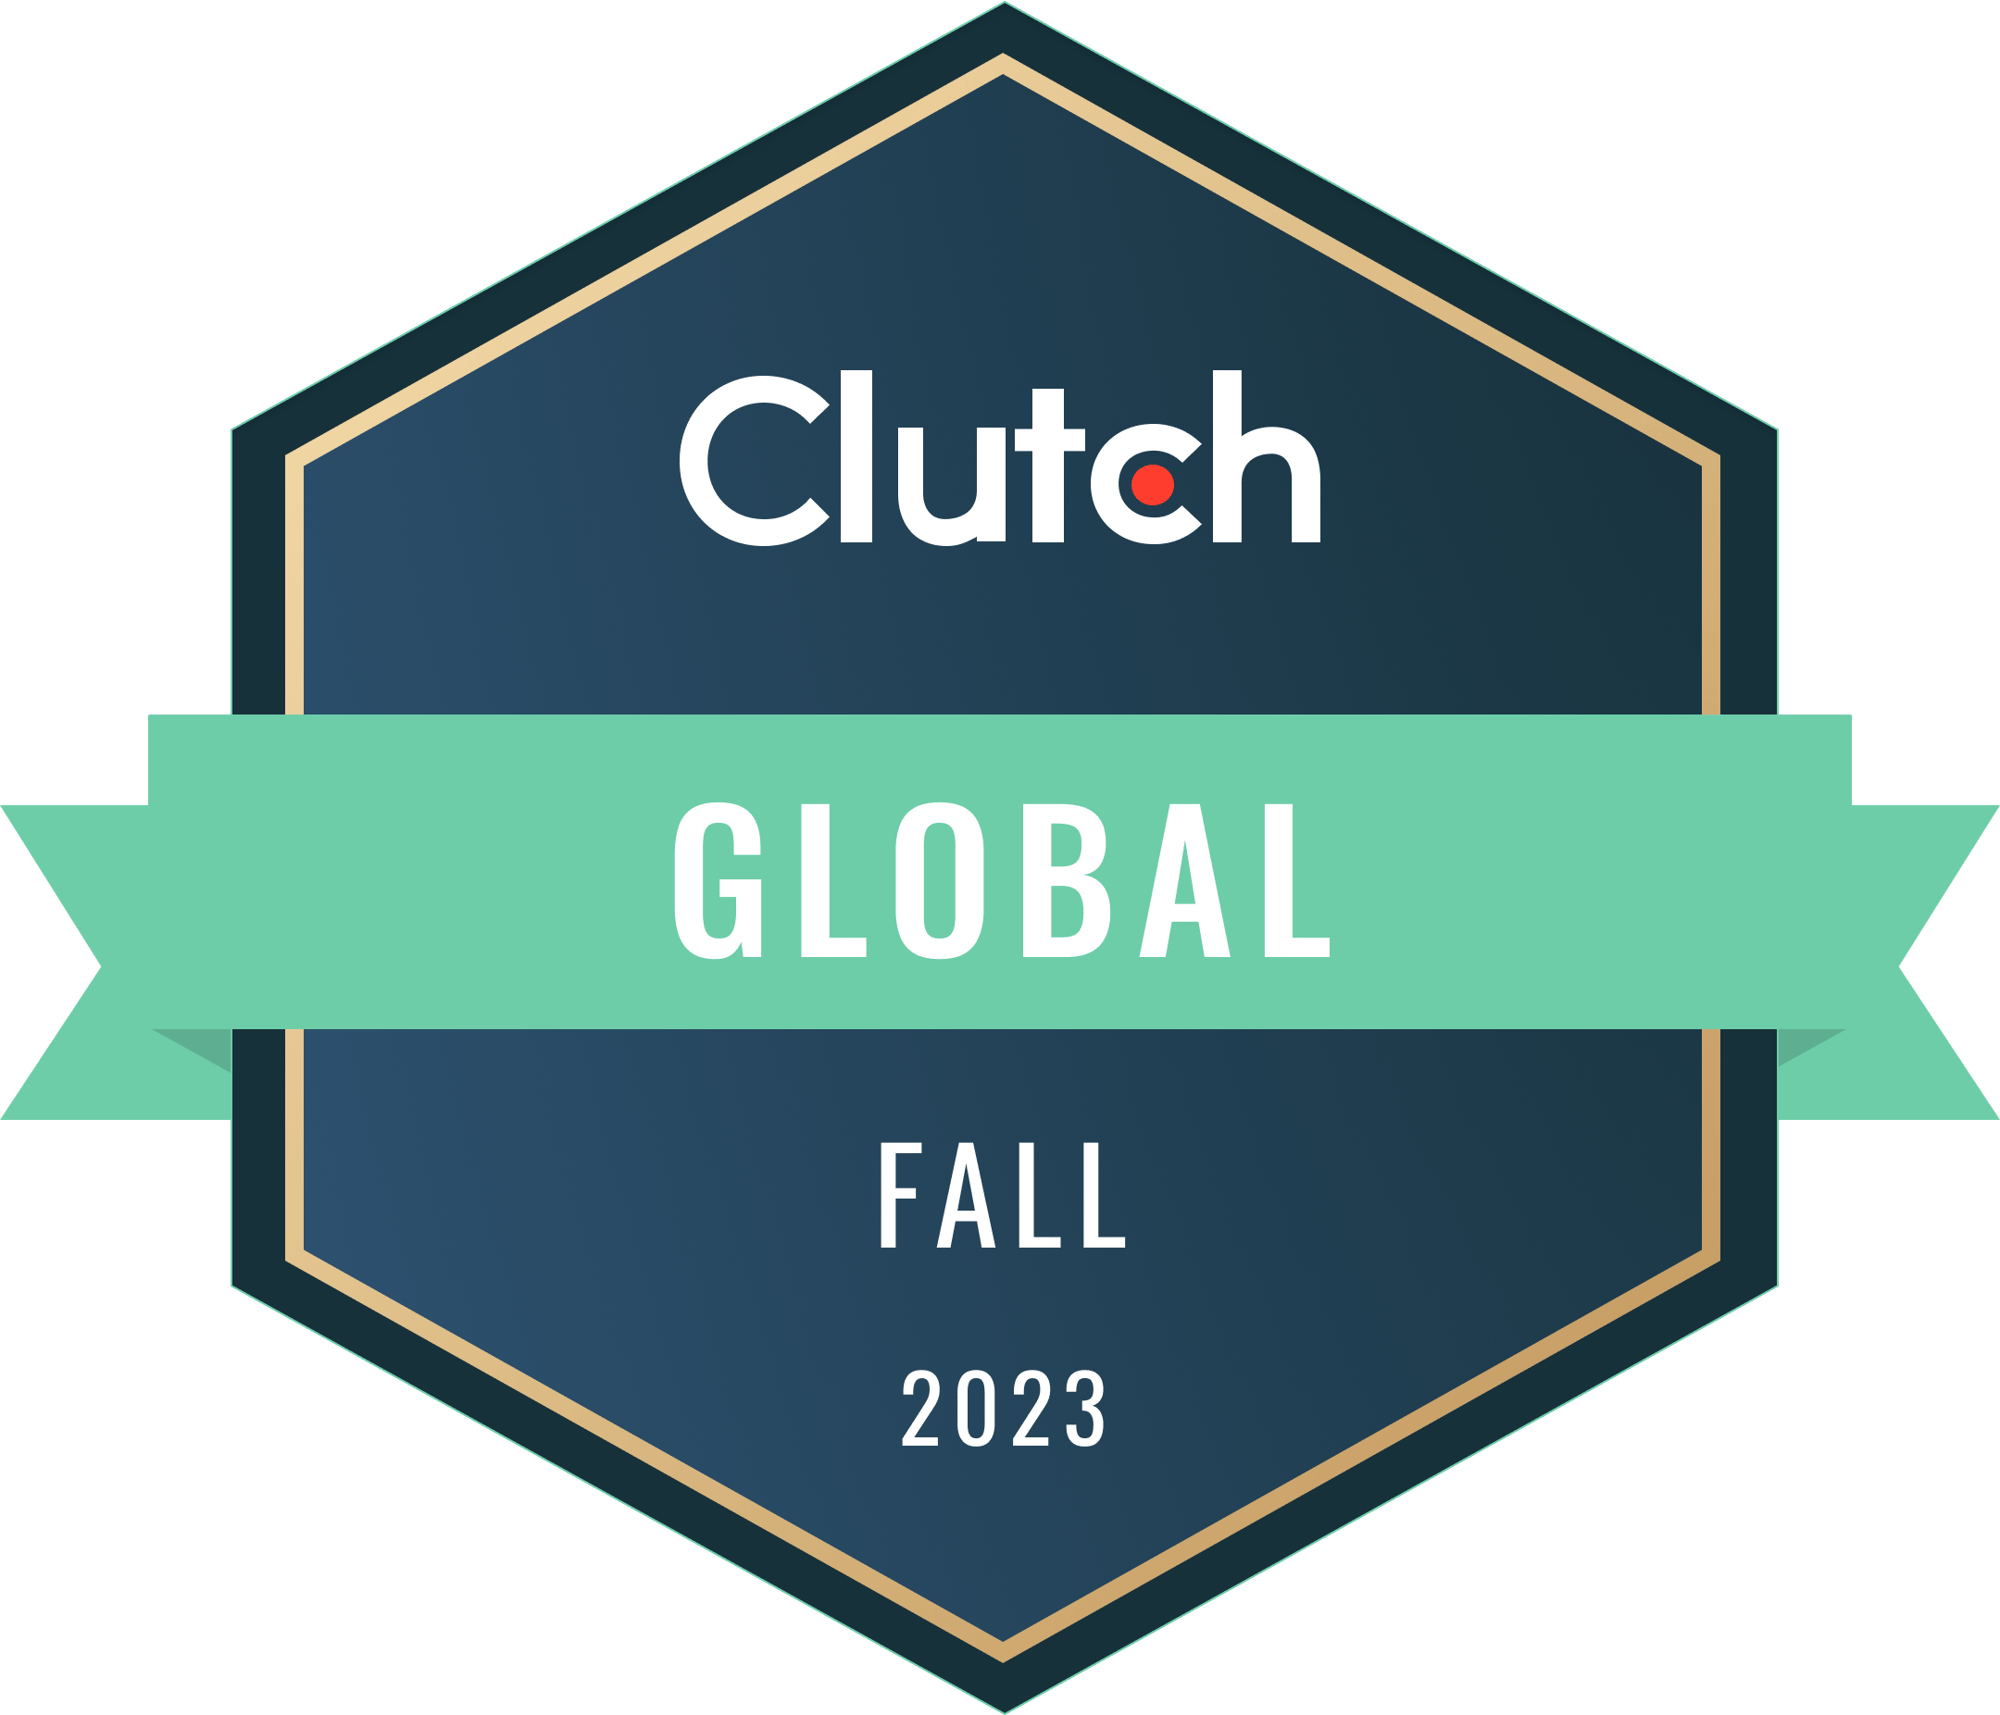 Clutch Global Badge for top B2B companies in Fall 2023